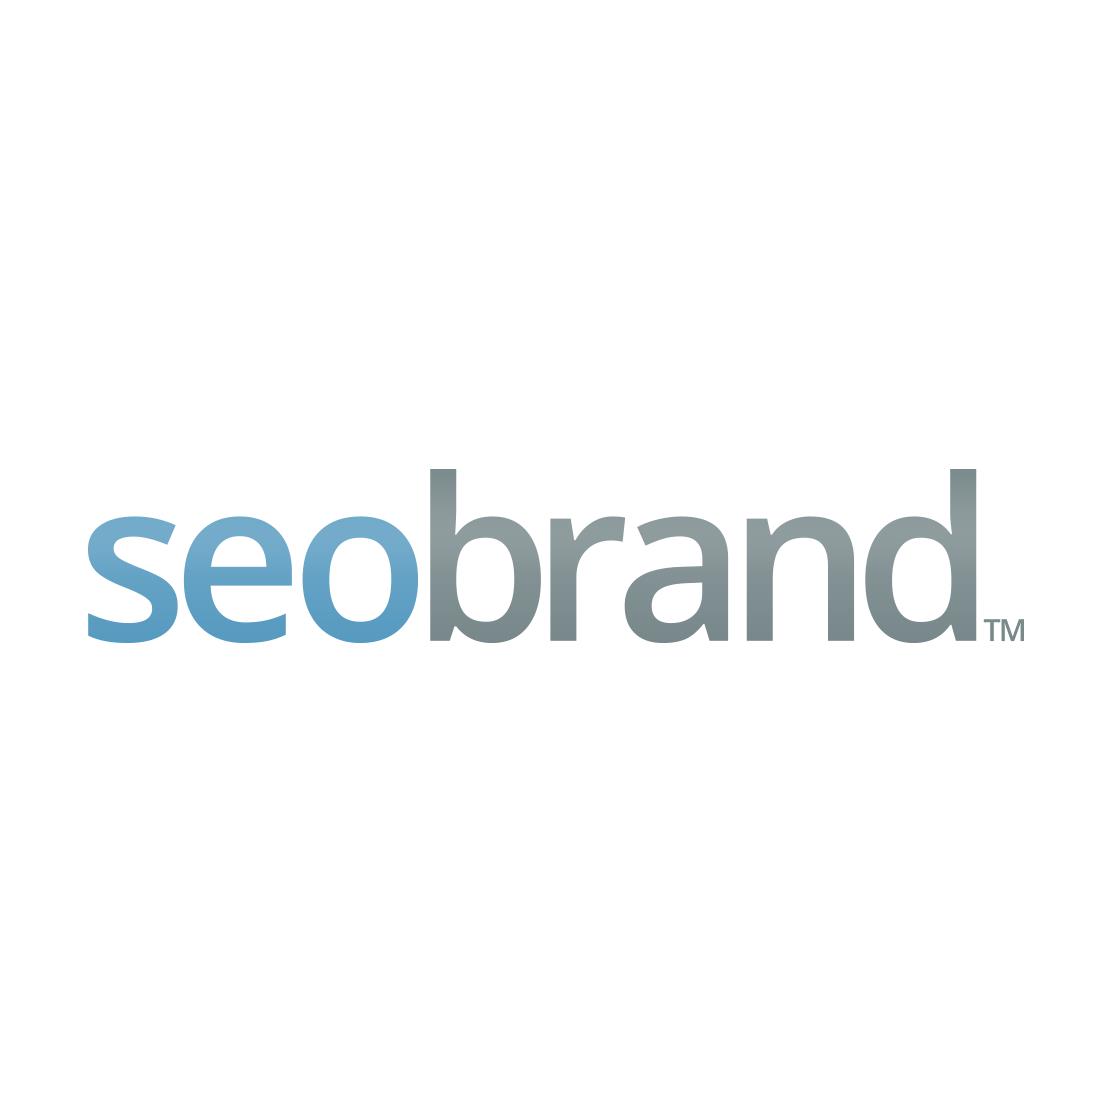 Top Real Estate SEO Business Logo: SEO Brand